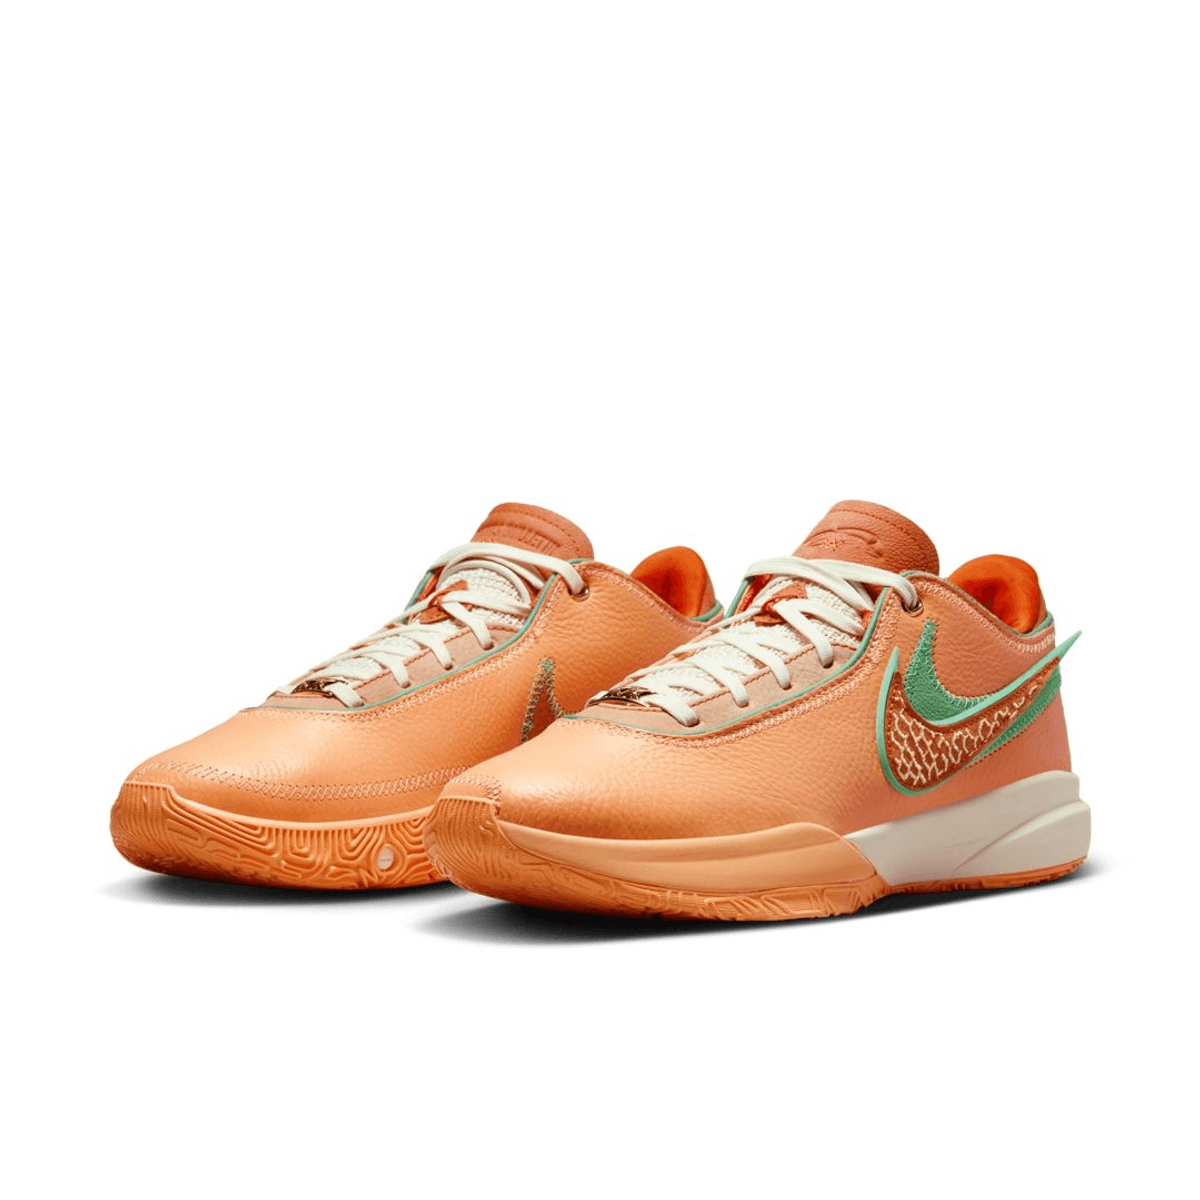 The Nike x APB x FAMU Lebron 20 "Peach Cream" Ready To Release